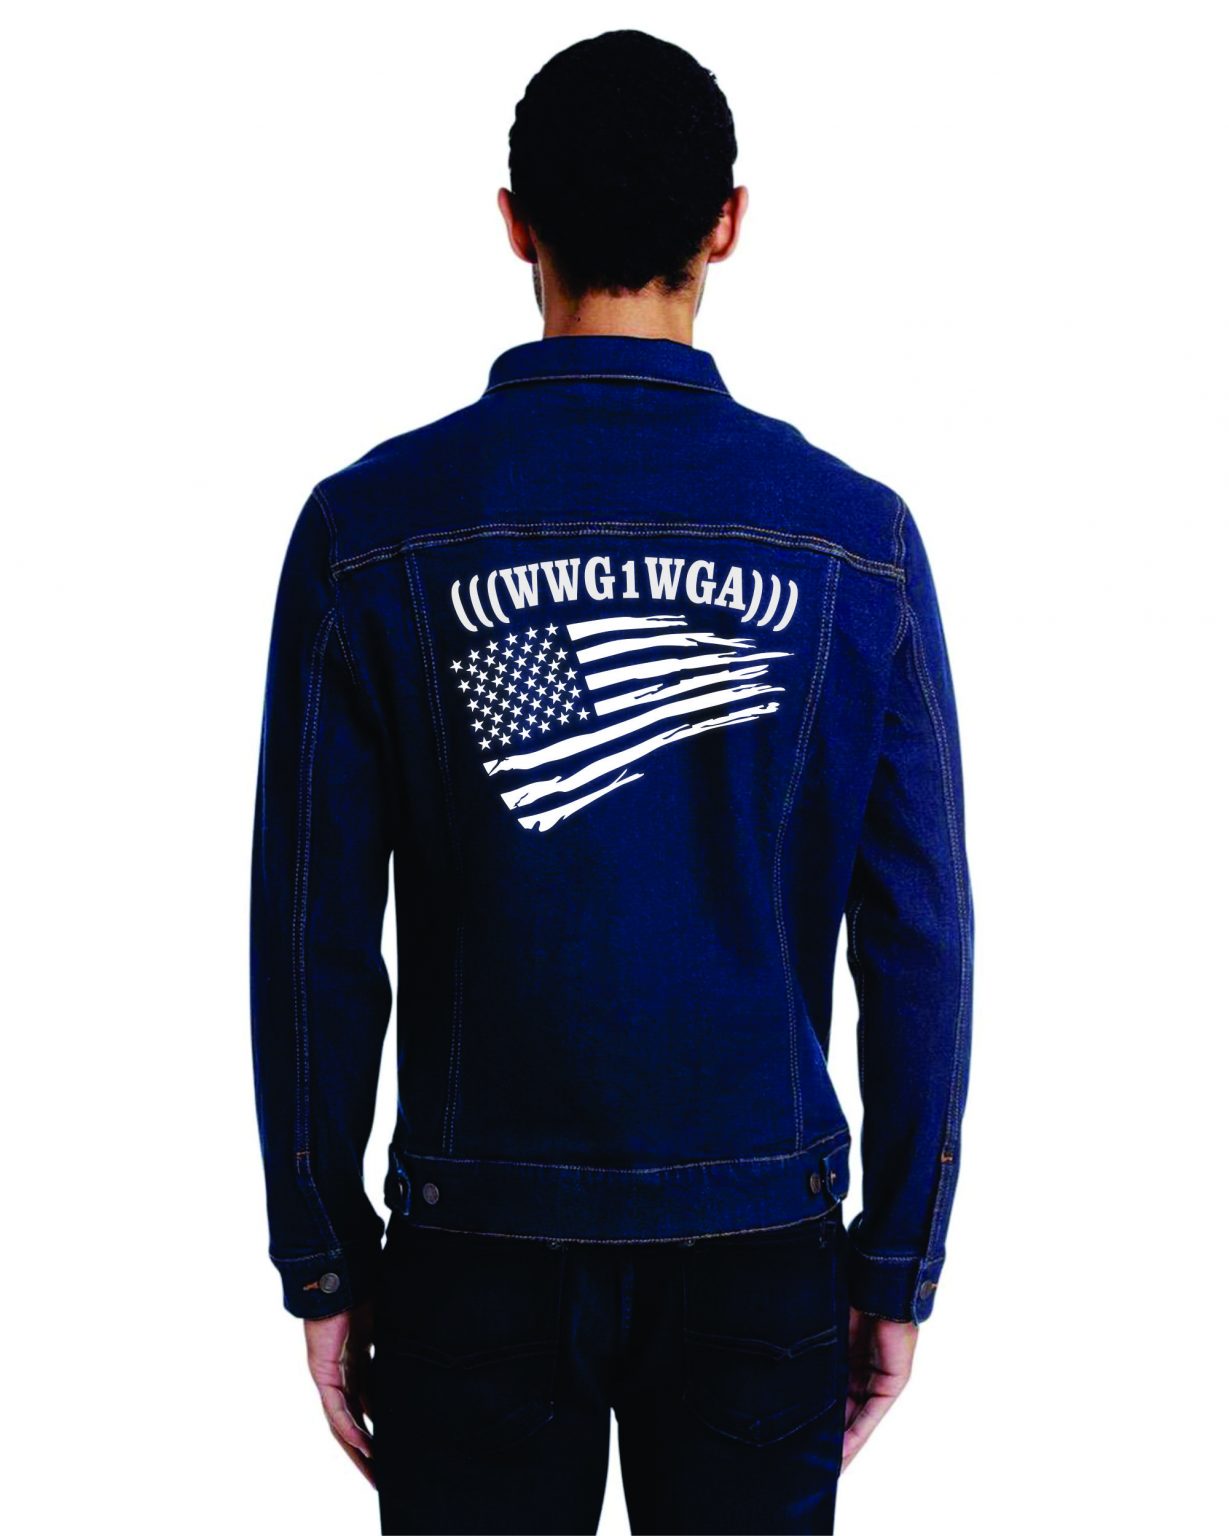 Denim Jacket - Reflective (((WWG1WGA))) With American Flag